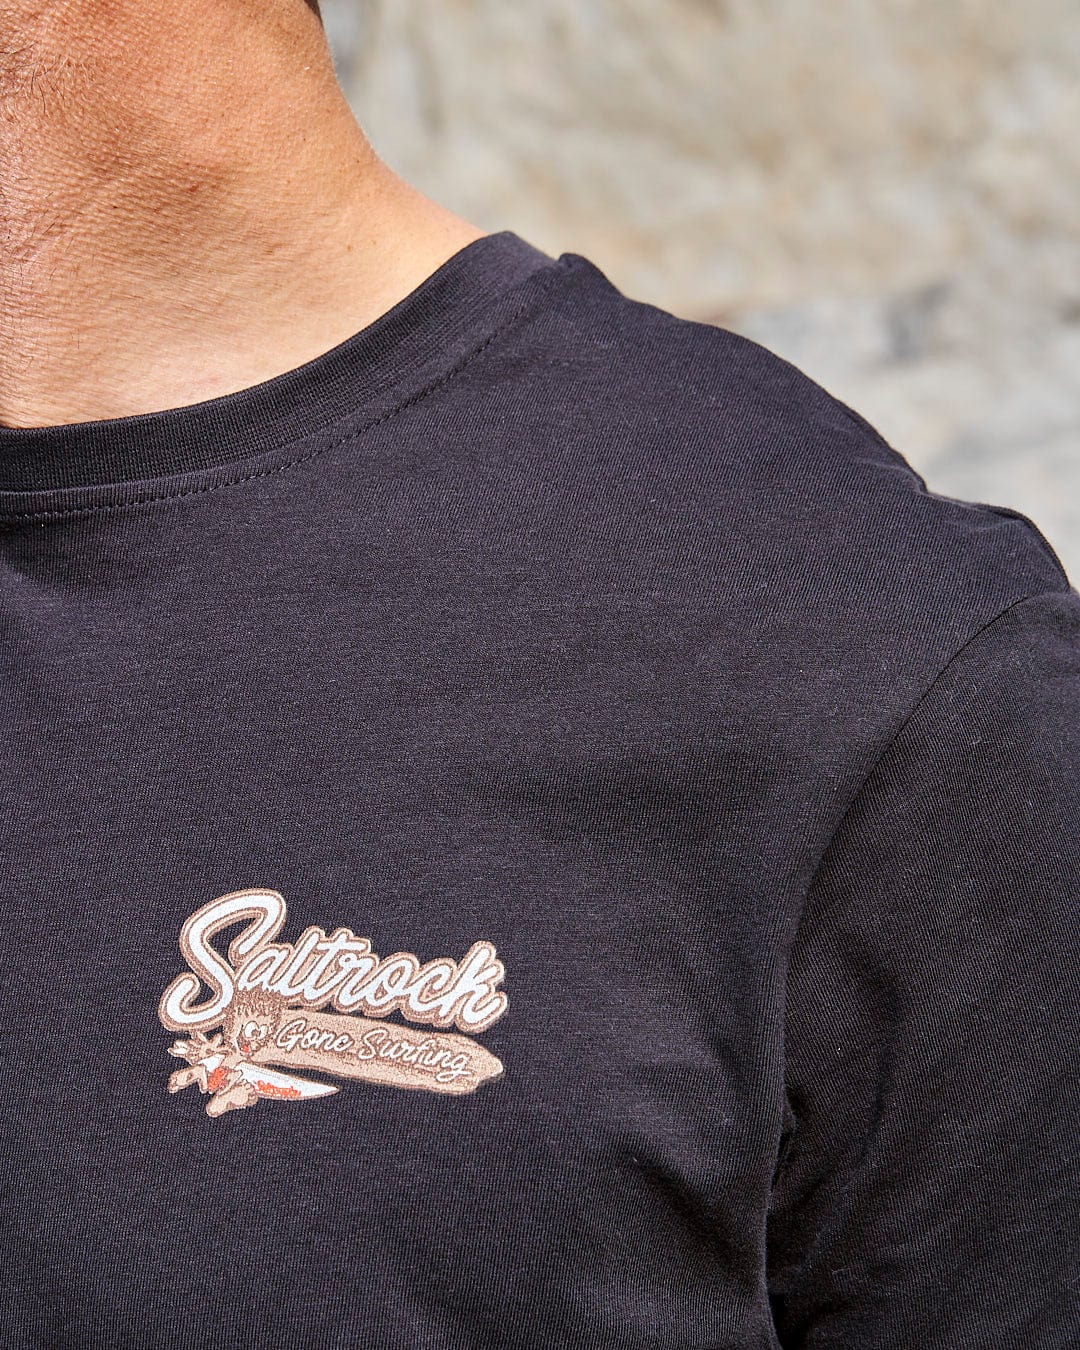 A man wearing a Saltrock Beach Sign Devon - Mens T-Shirt - Dark Grey with a logo on it.